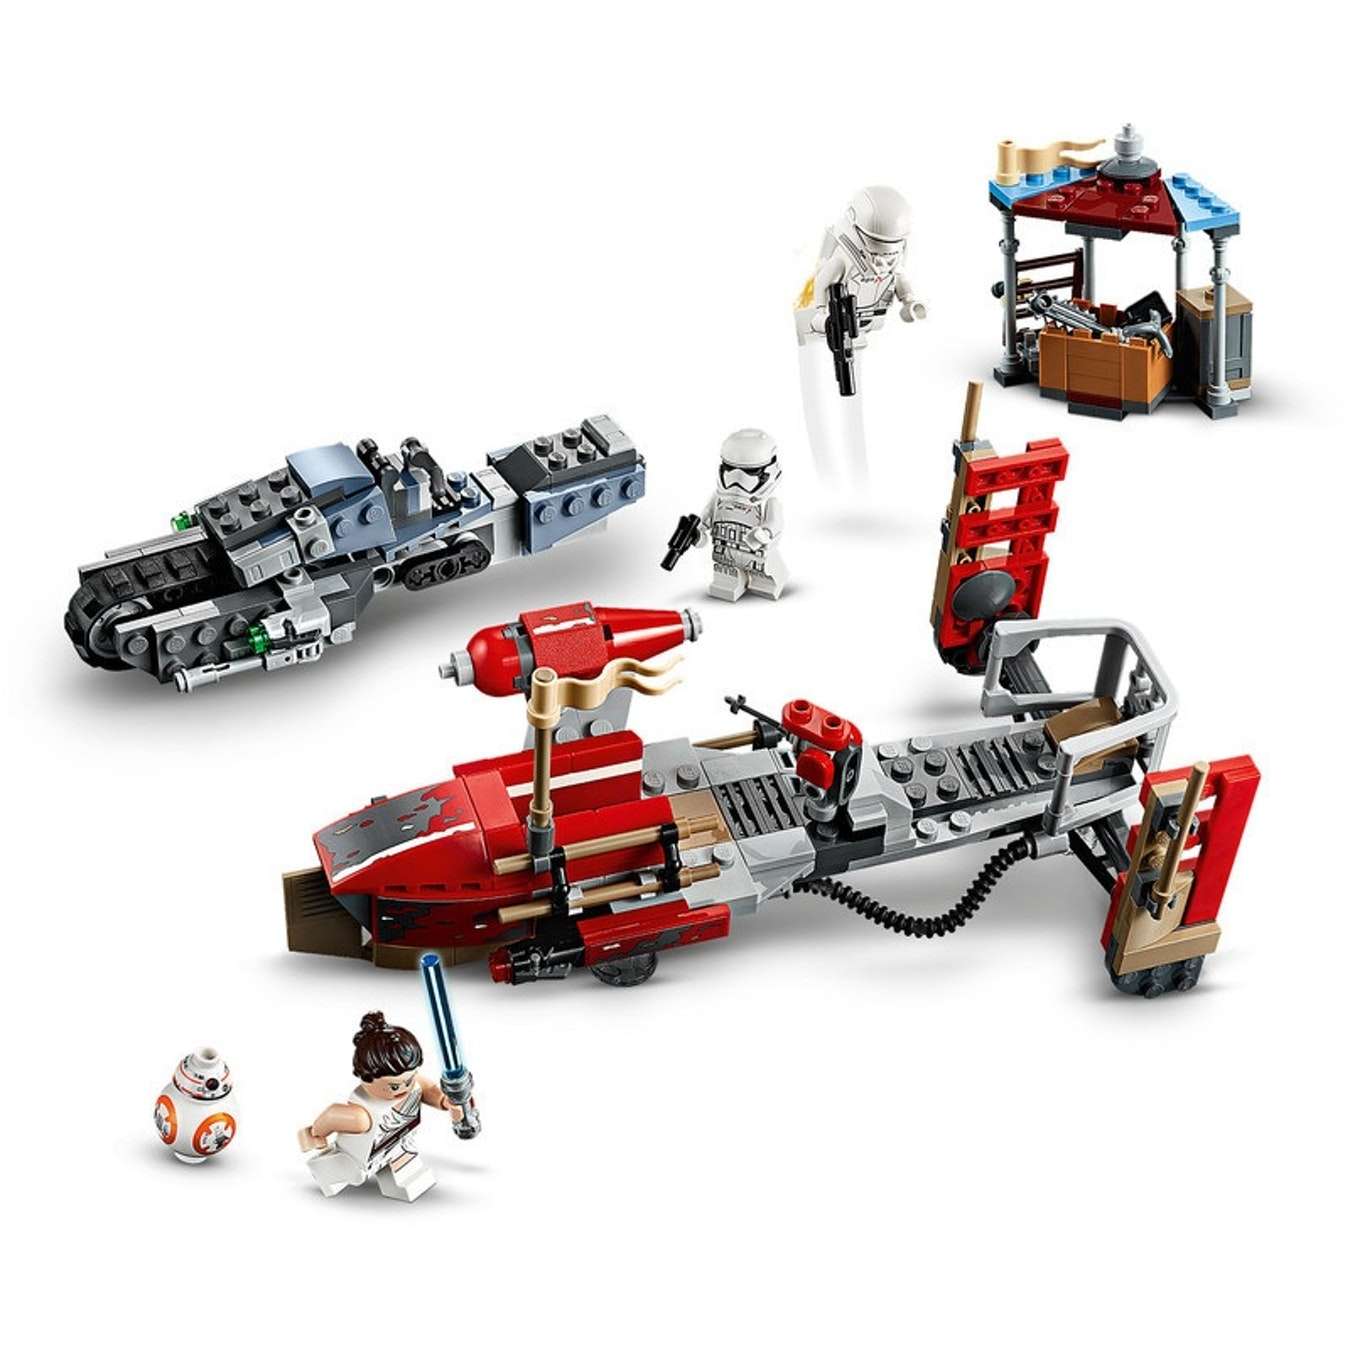 LEGO Star Wars - Pasaana Speeder Jagd (75250)